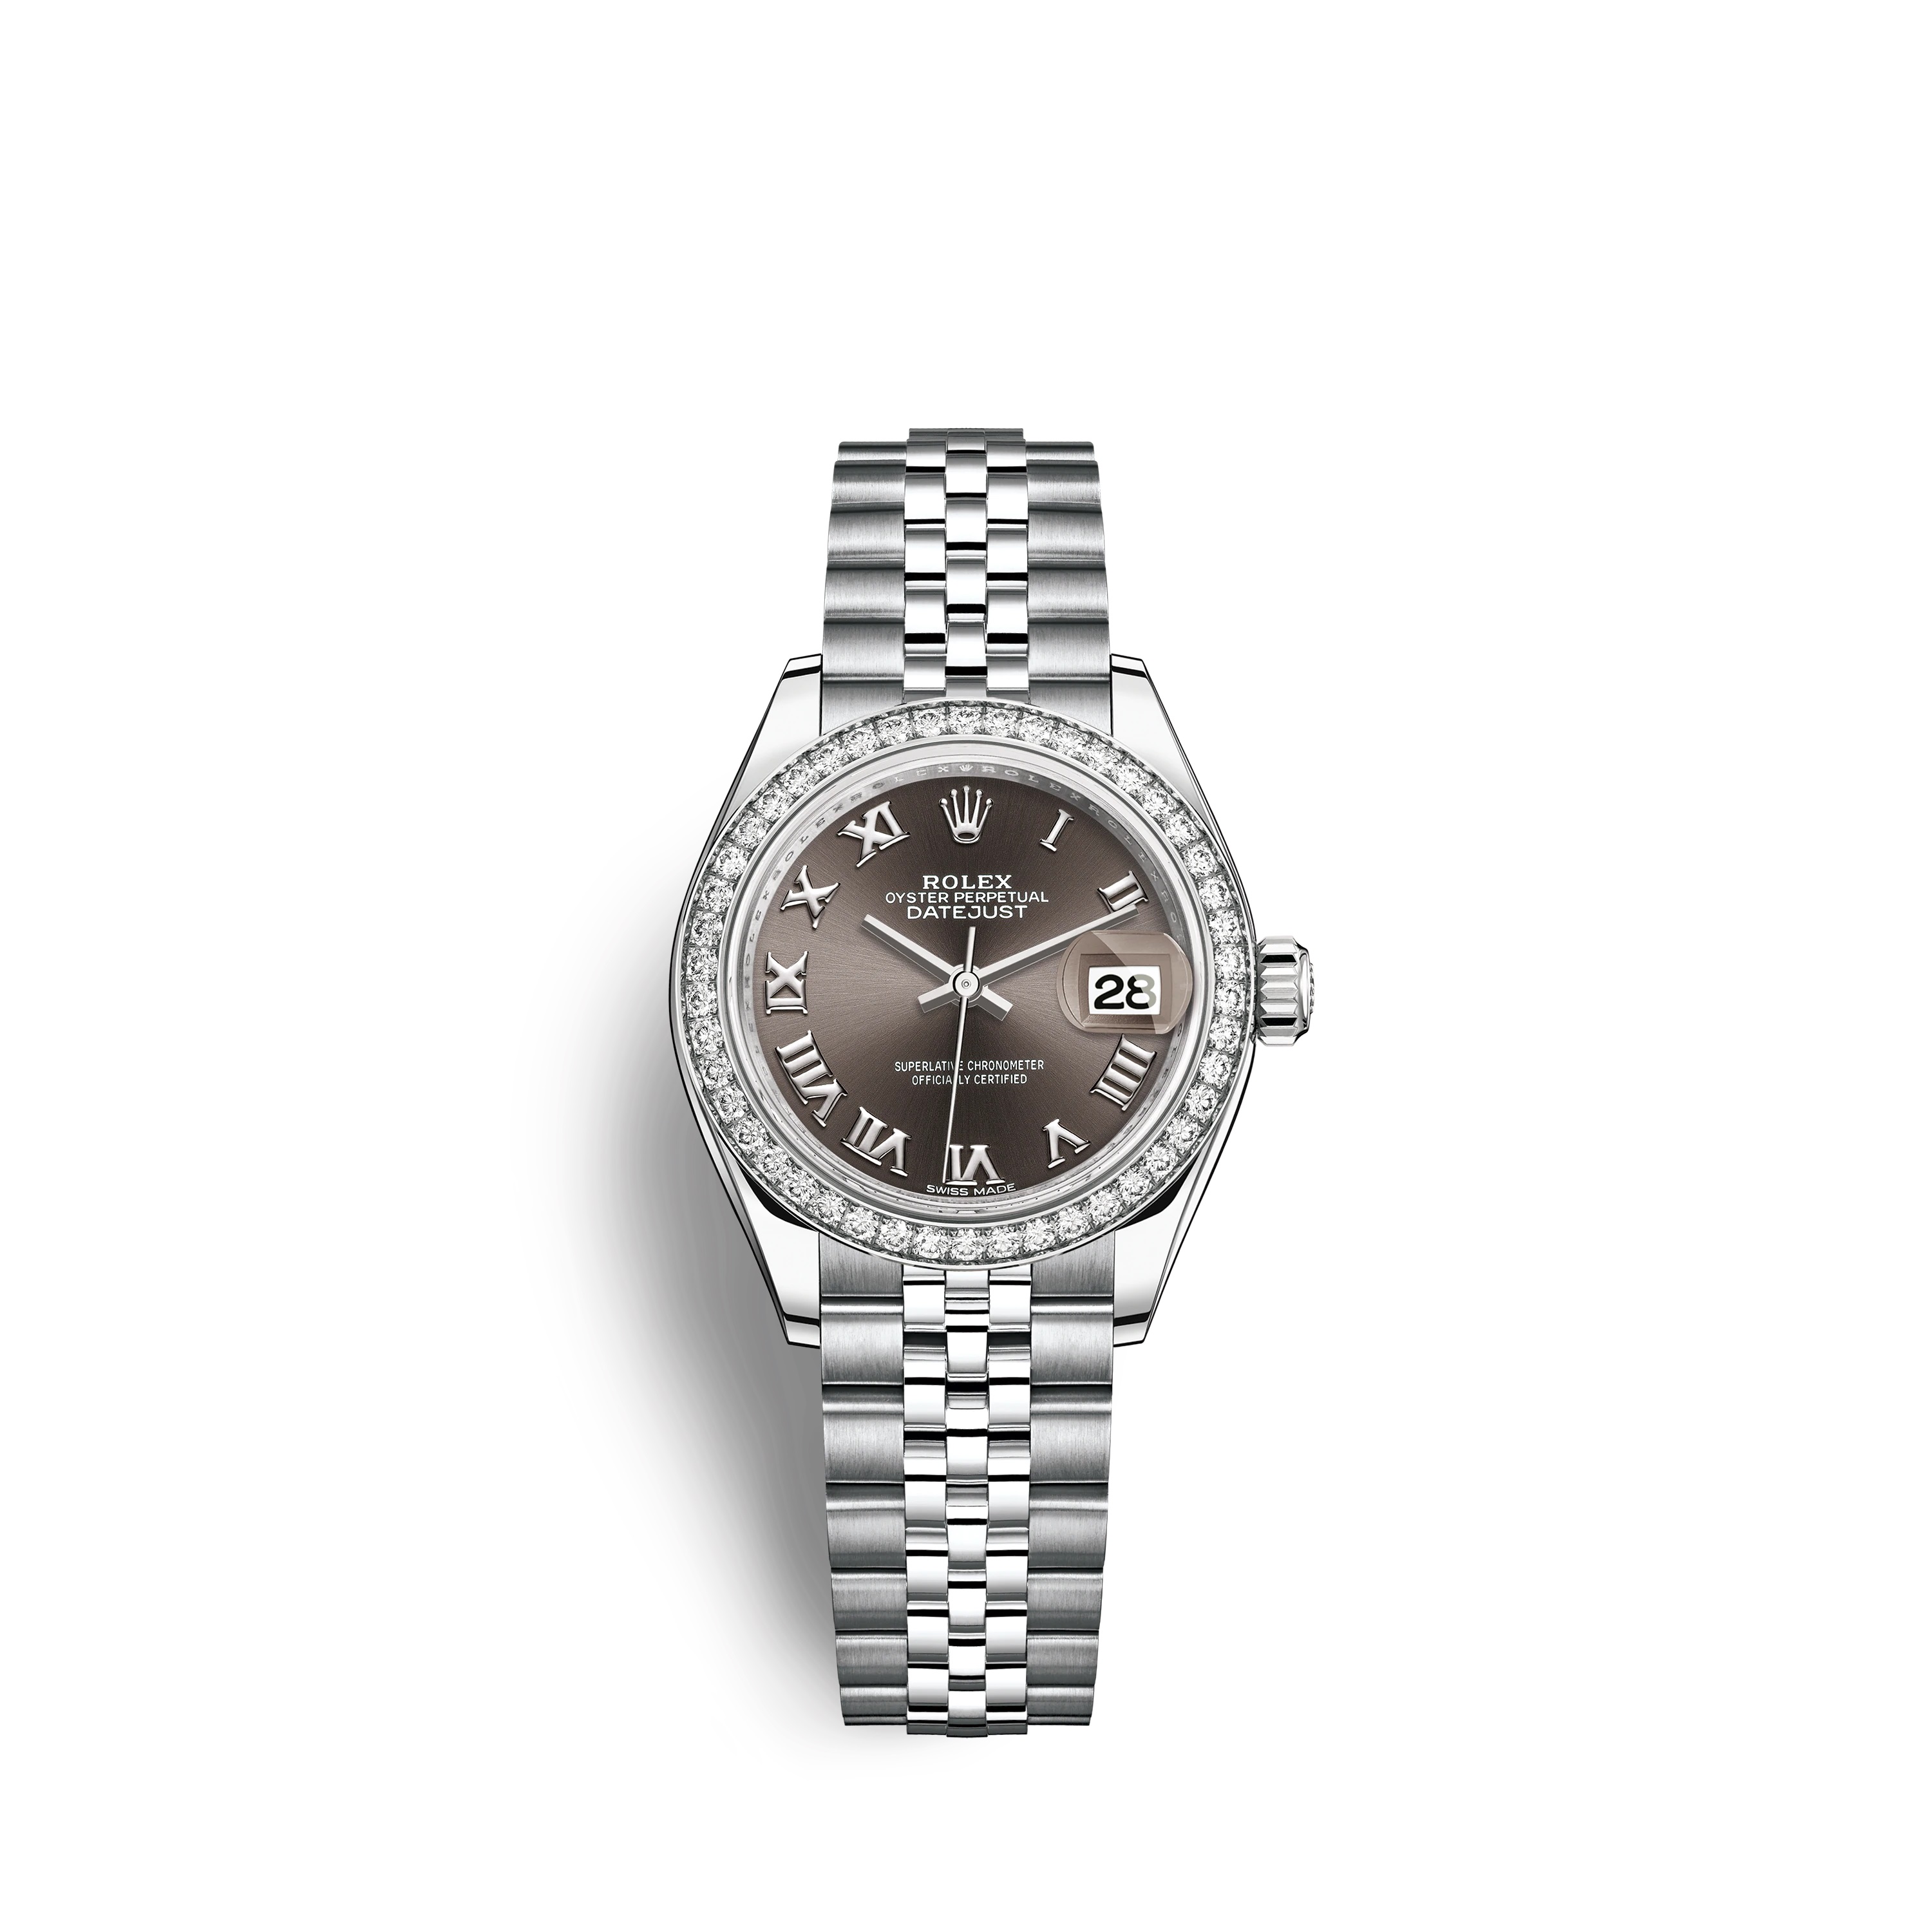 Lady-Datejust 28 279384RBR White Gold & Stainless Steel Watch (Dark Grey)